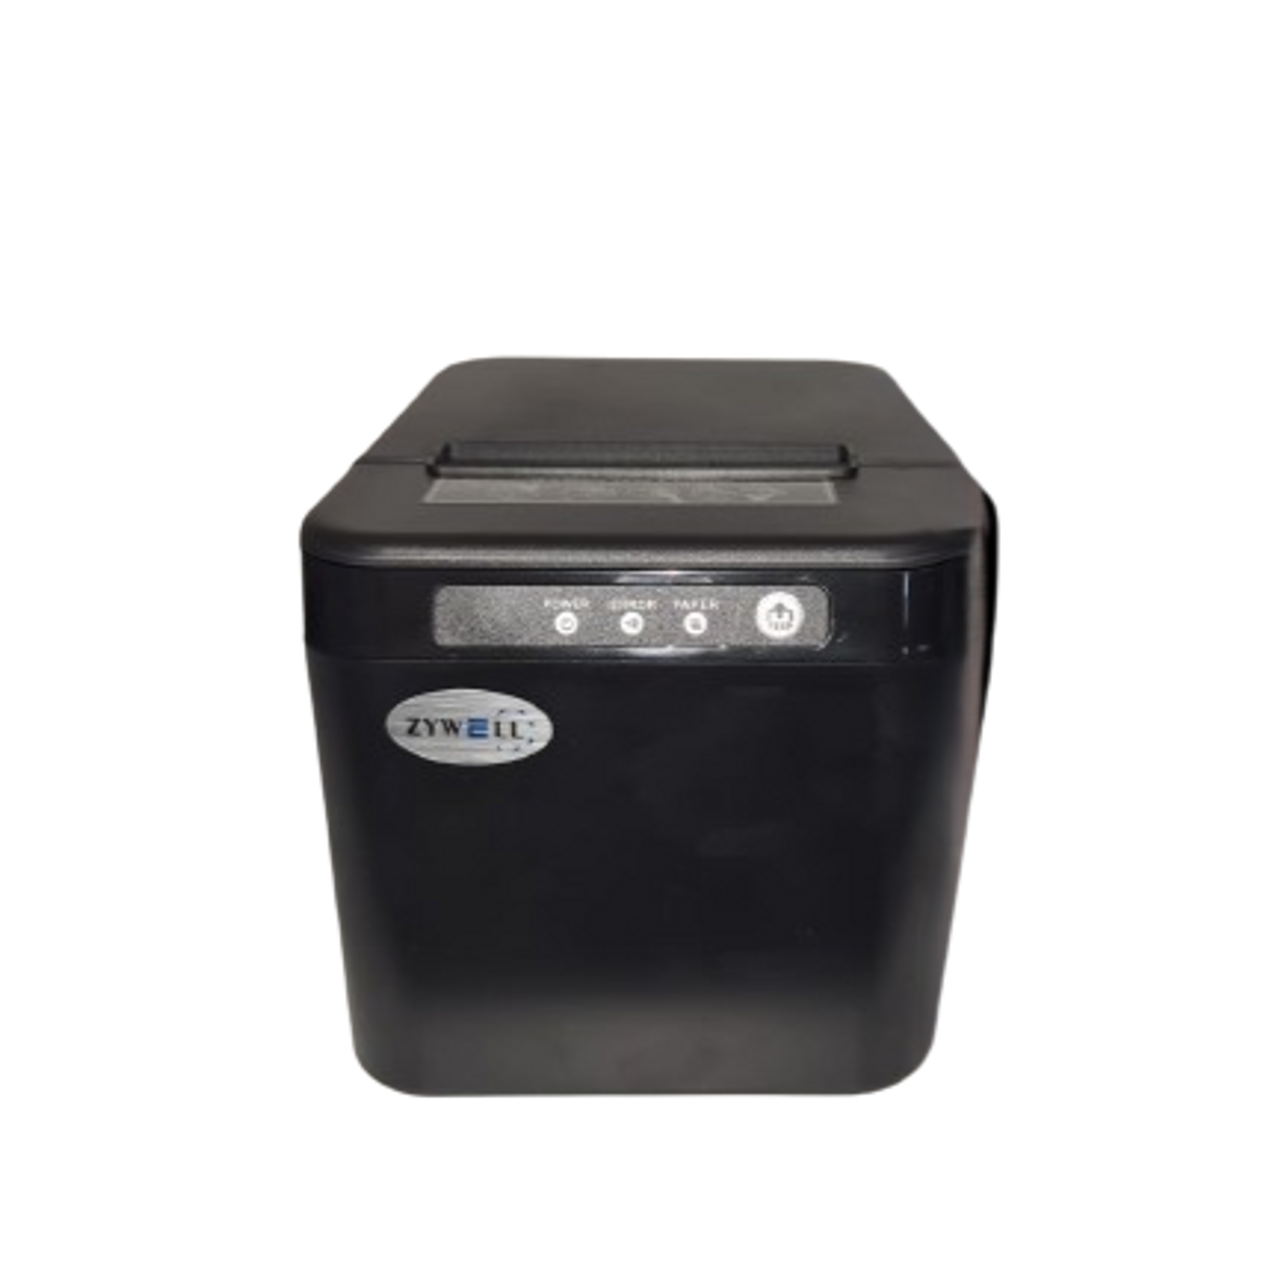 Thermal receipt printer USB+LAN 200mm/s Black color EU plug ZY-Q821B